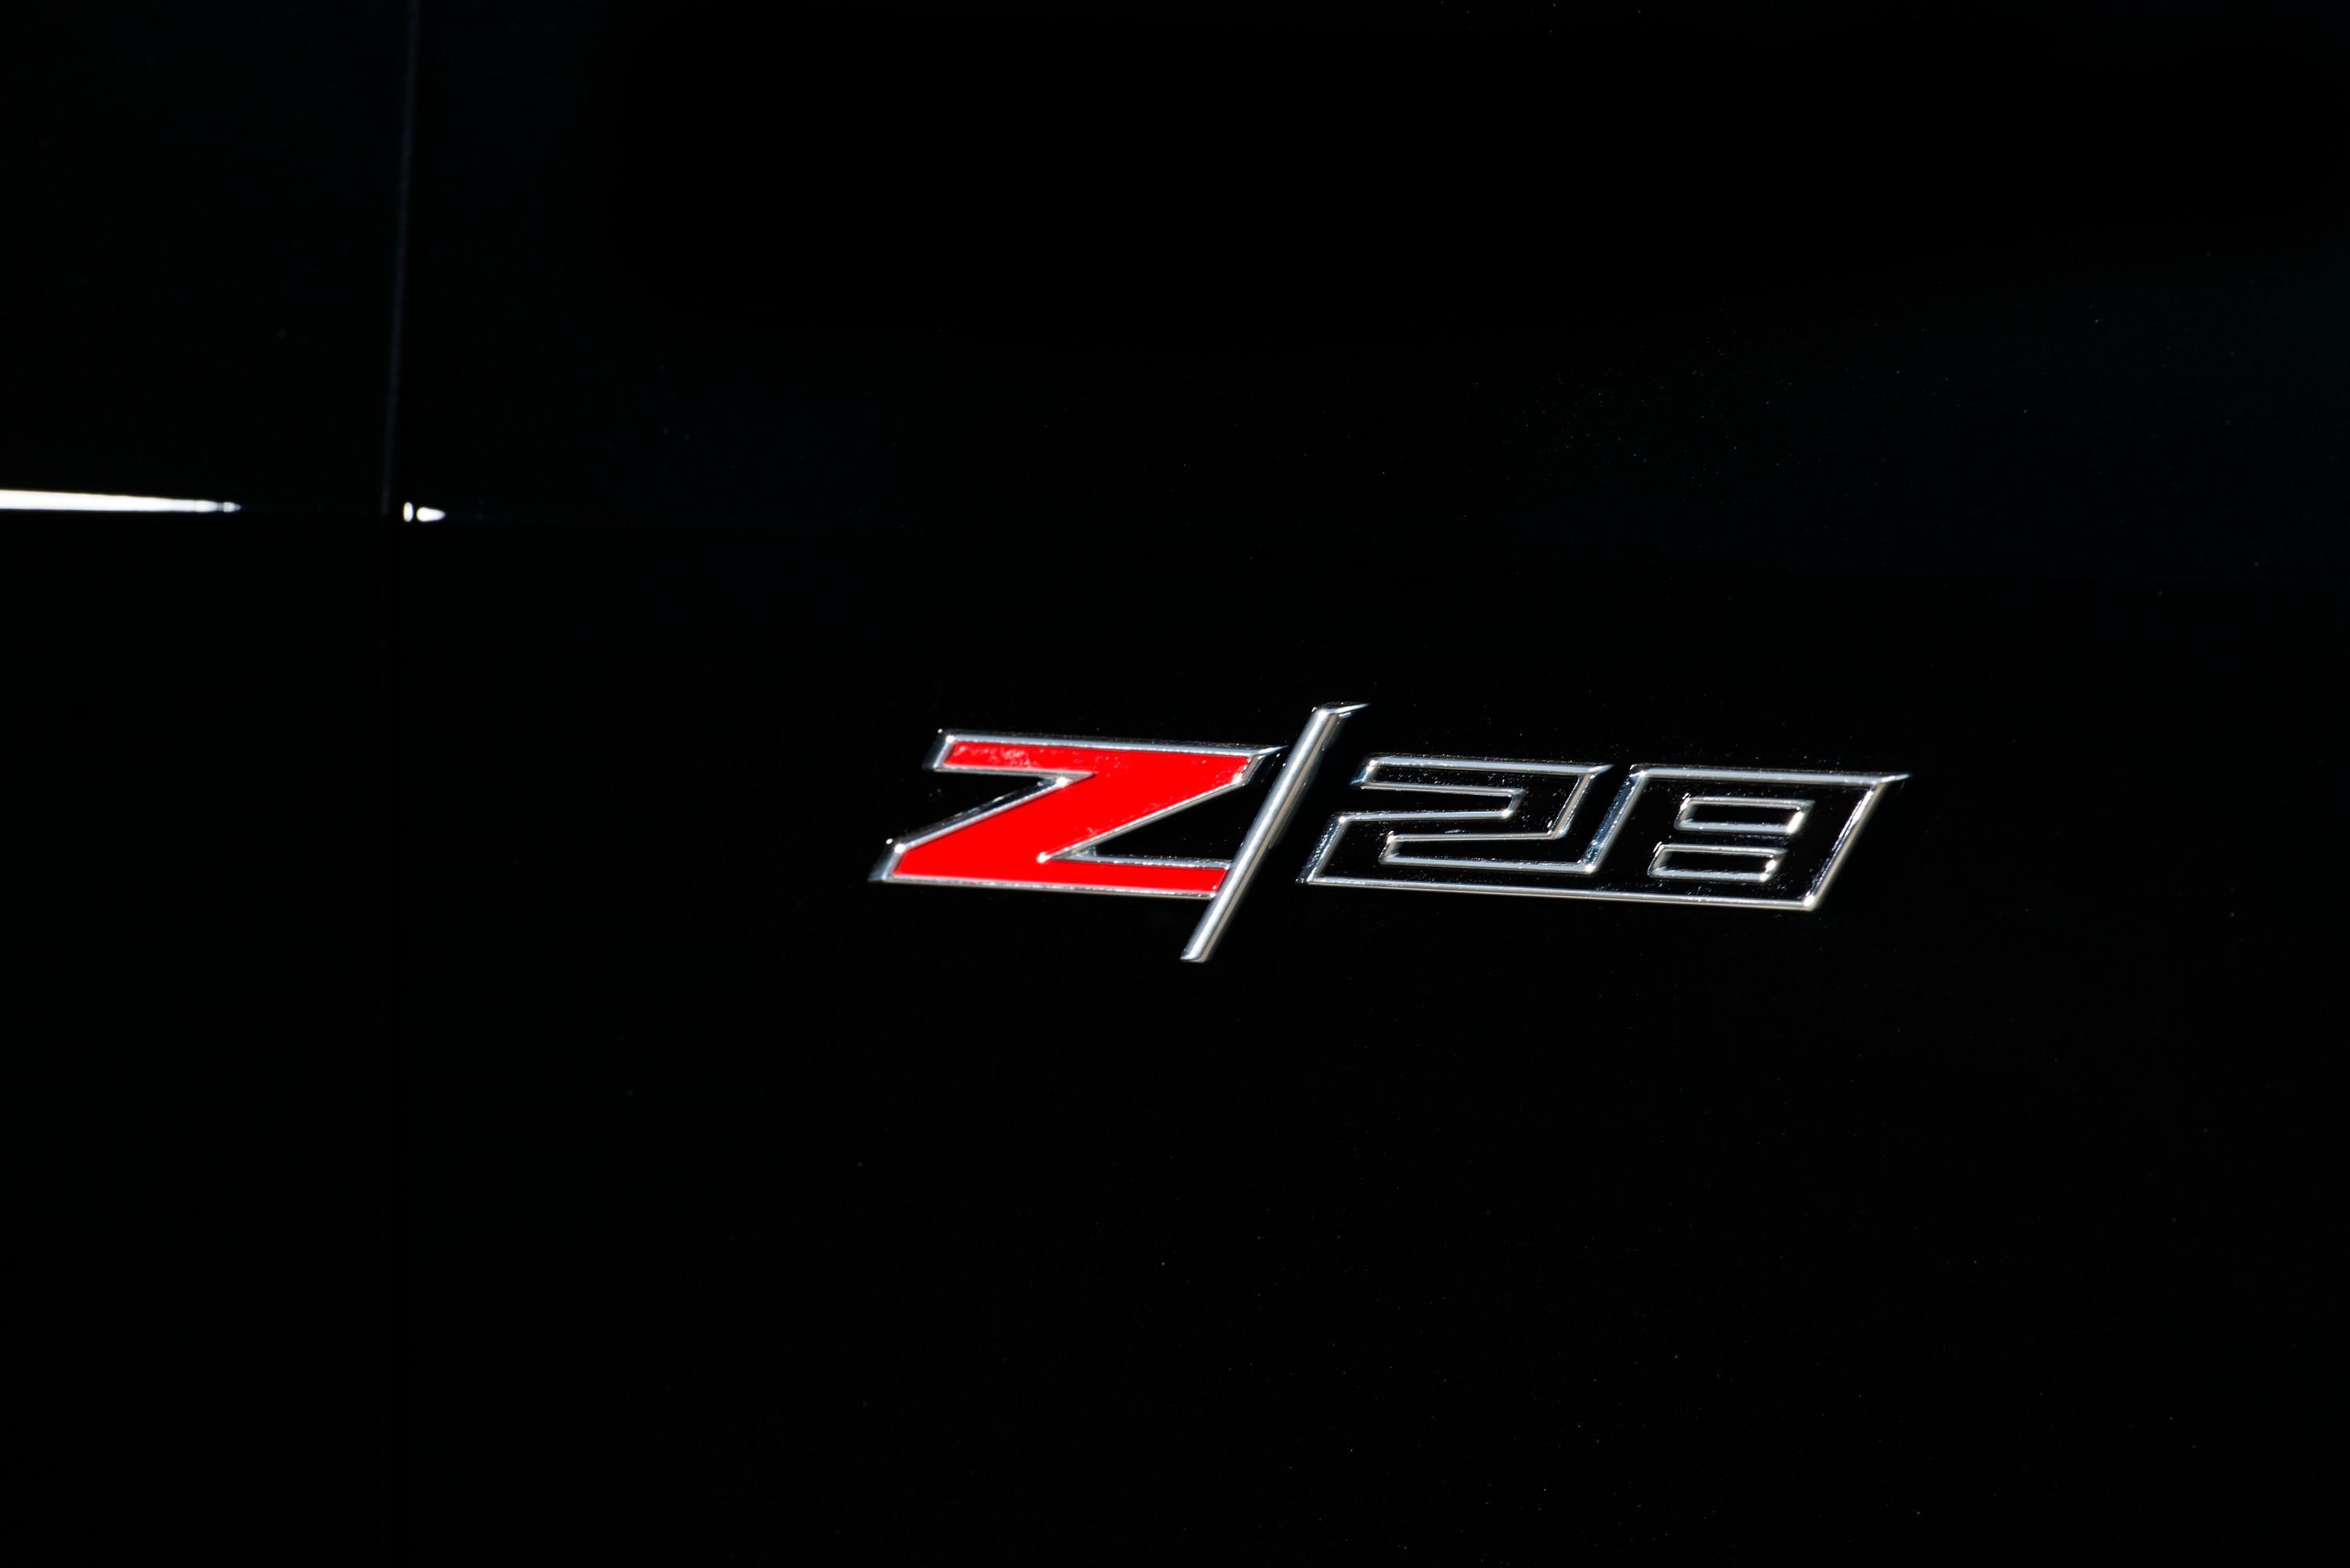 2014 Chevrolet Camaro Z/28 By Geiger Cars